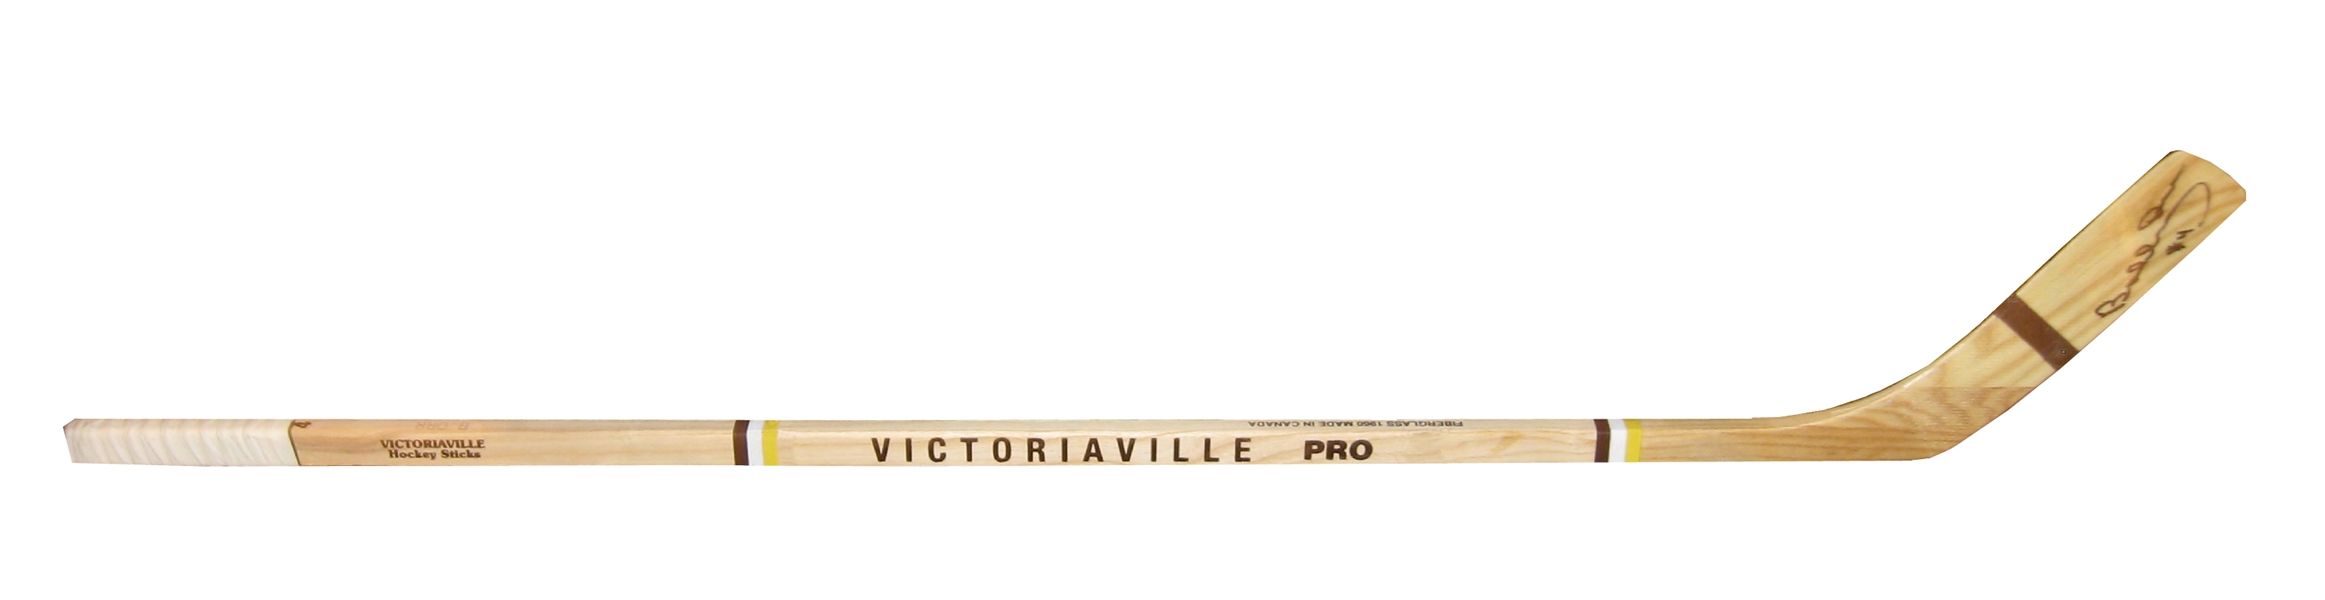 Bobby Orr - Signed Hockey Stick Bruins Victoriaville